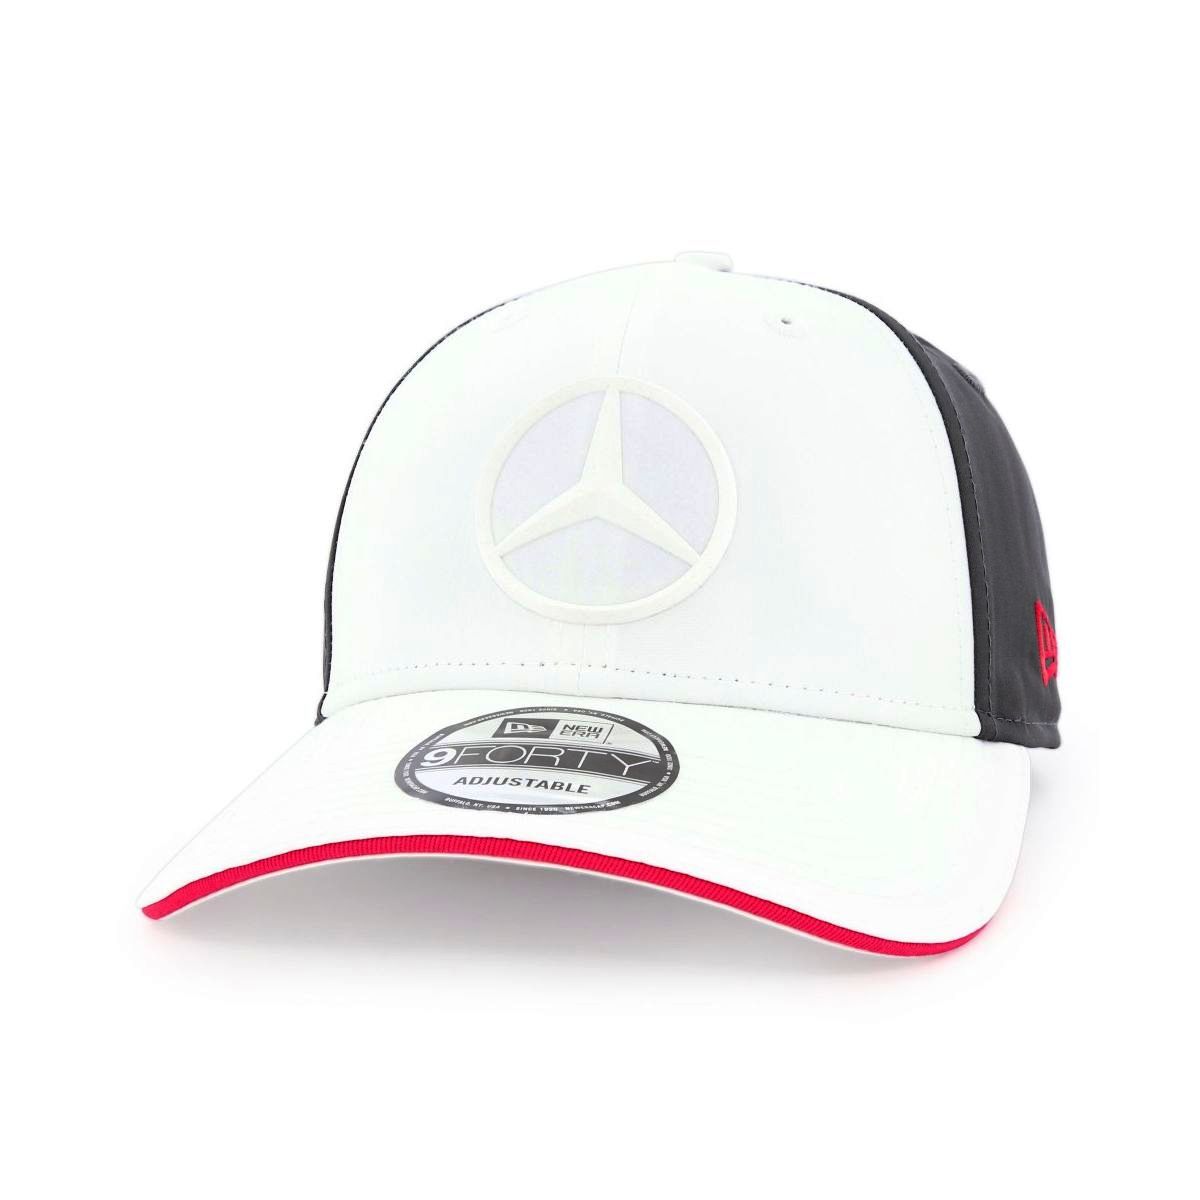 New Era Mercedes E-Sports Replica Men's Cap White